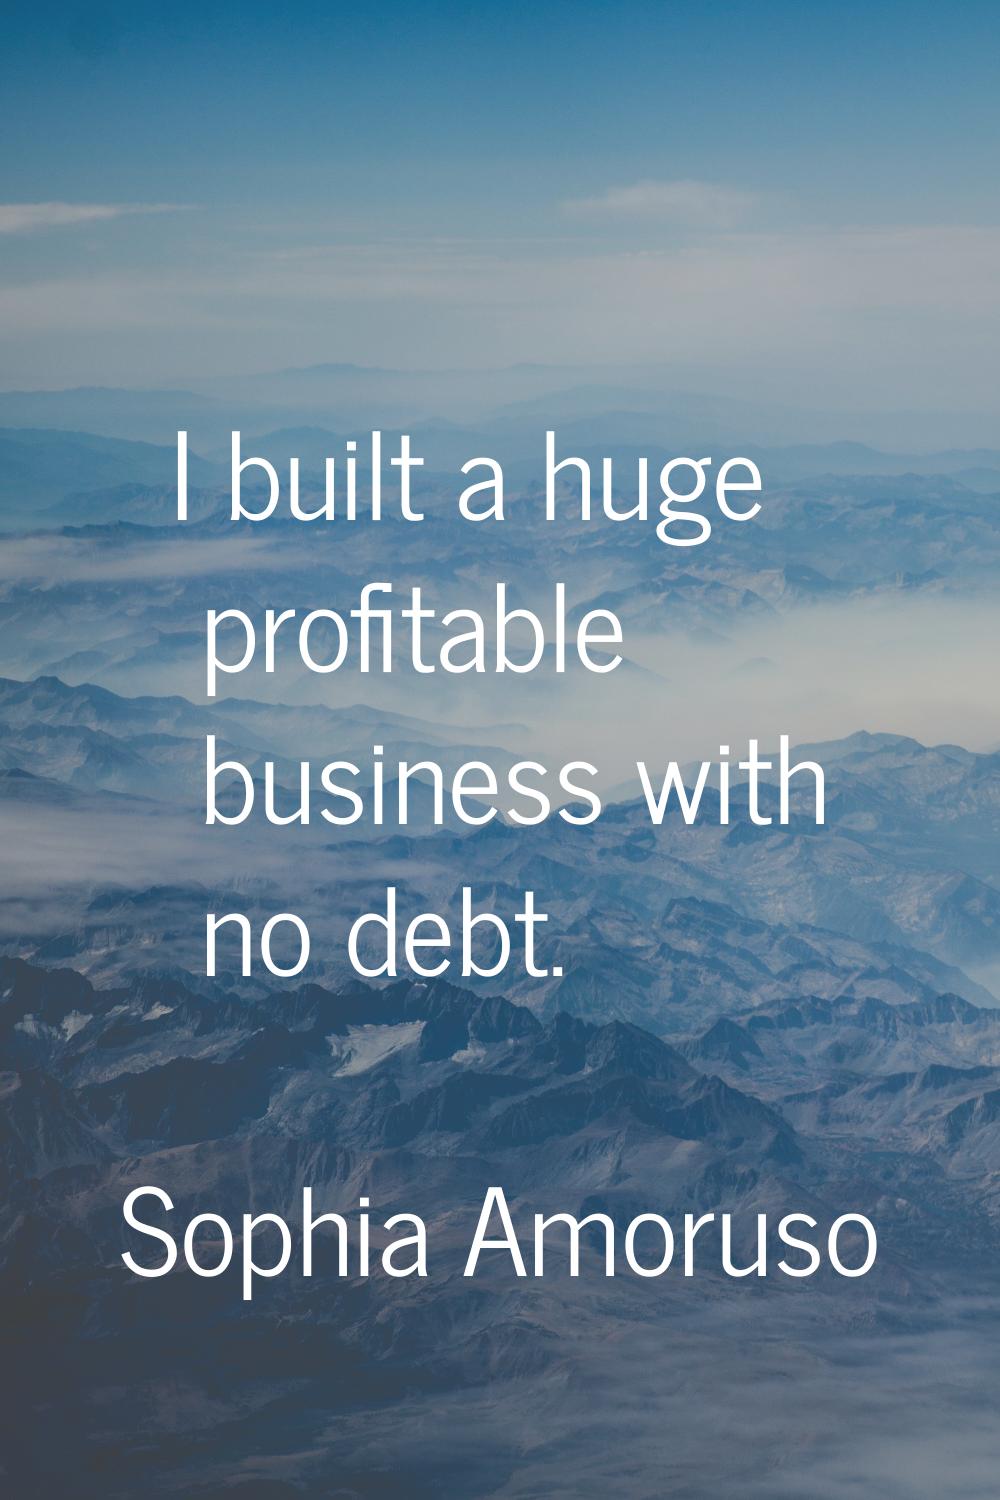 I built a huge profitable business with no debt.